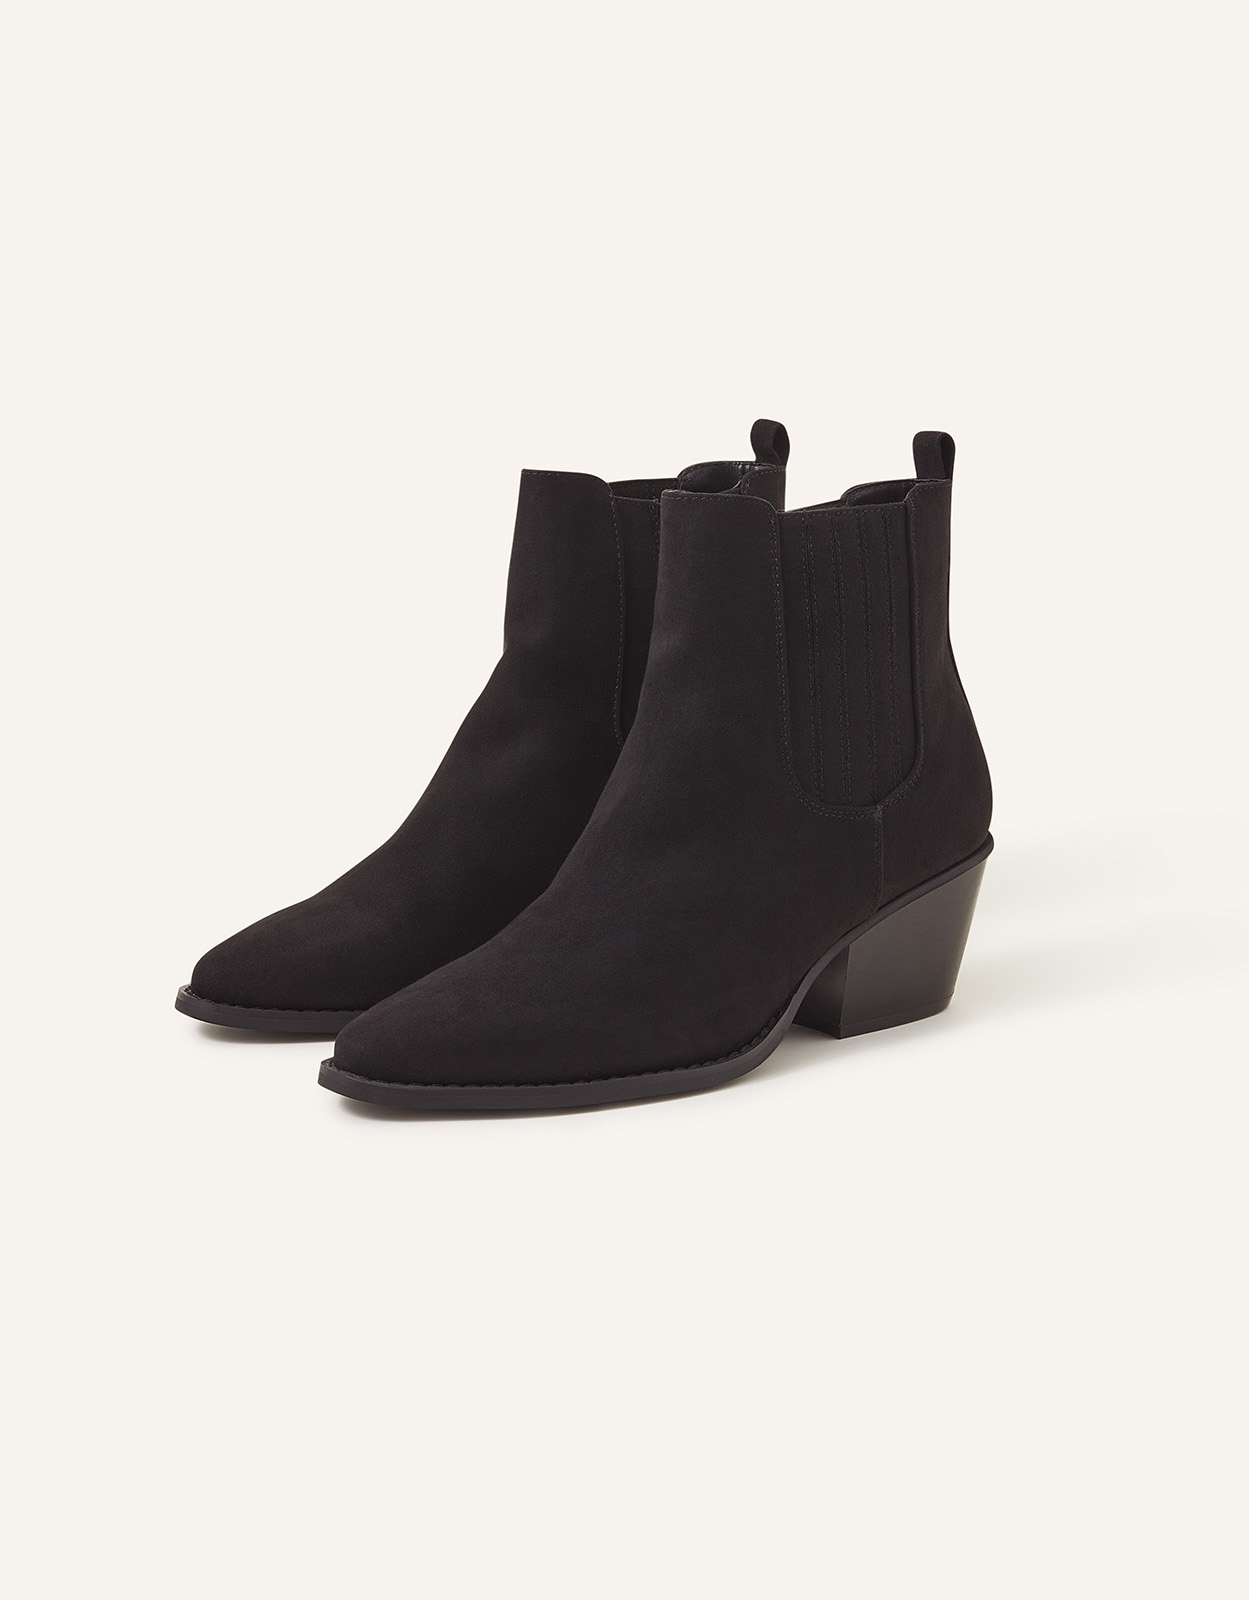 Accessorize Women's Western Boots Black, Size: 36